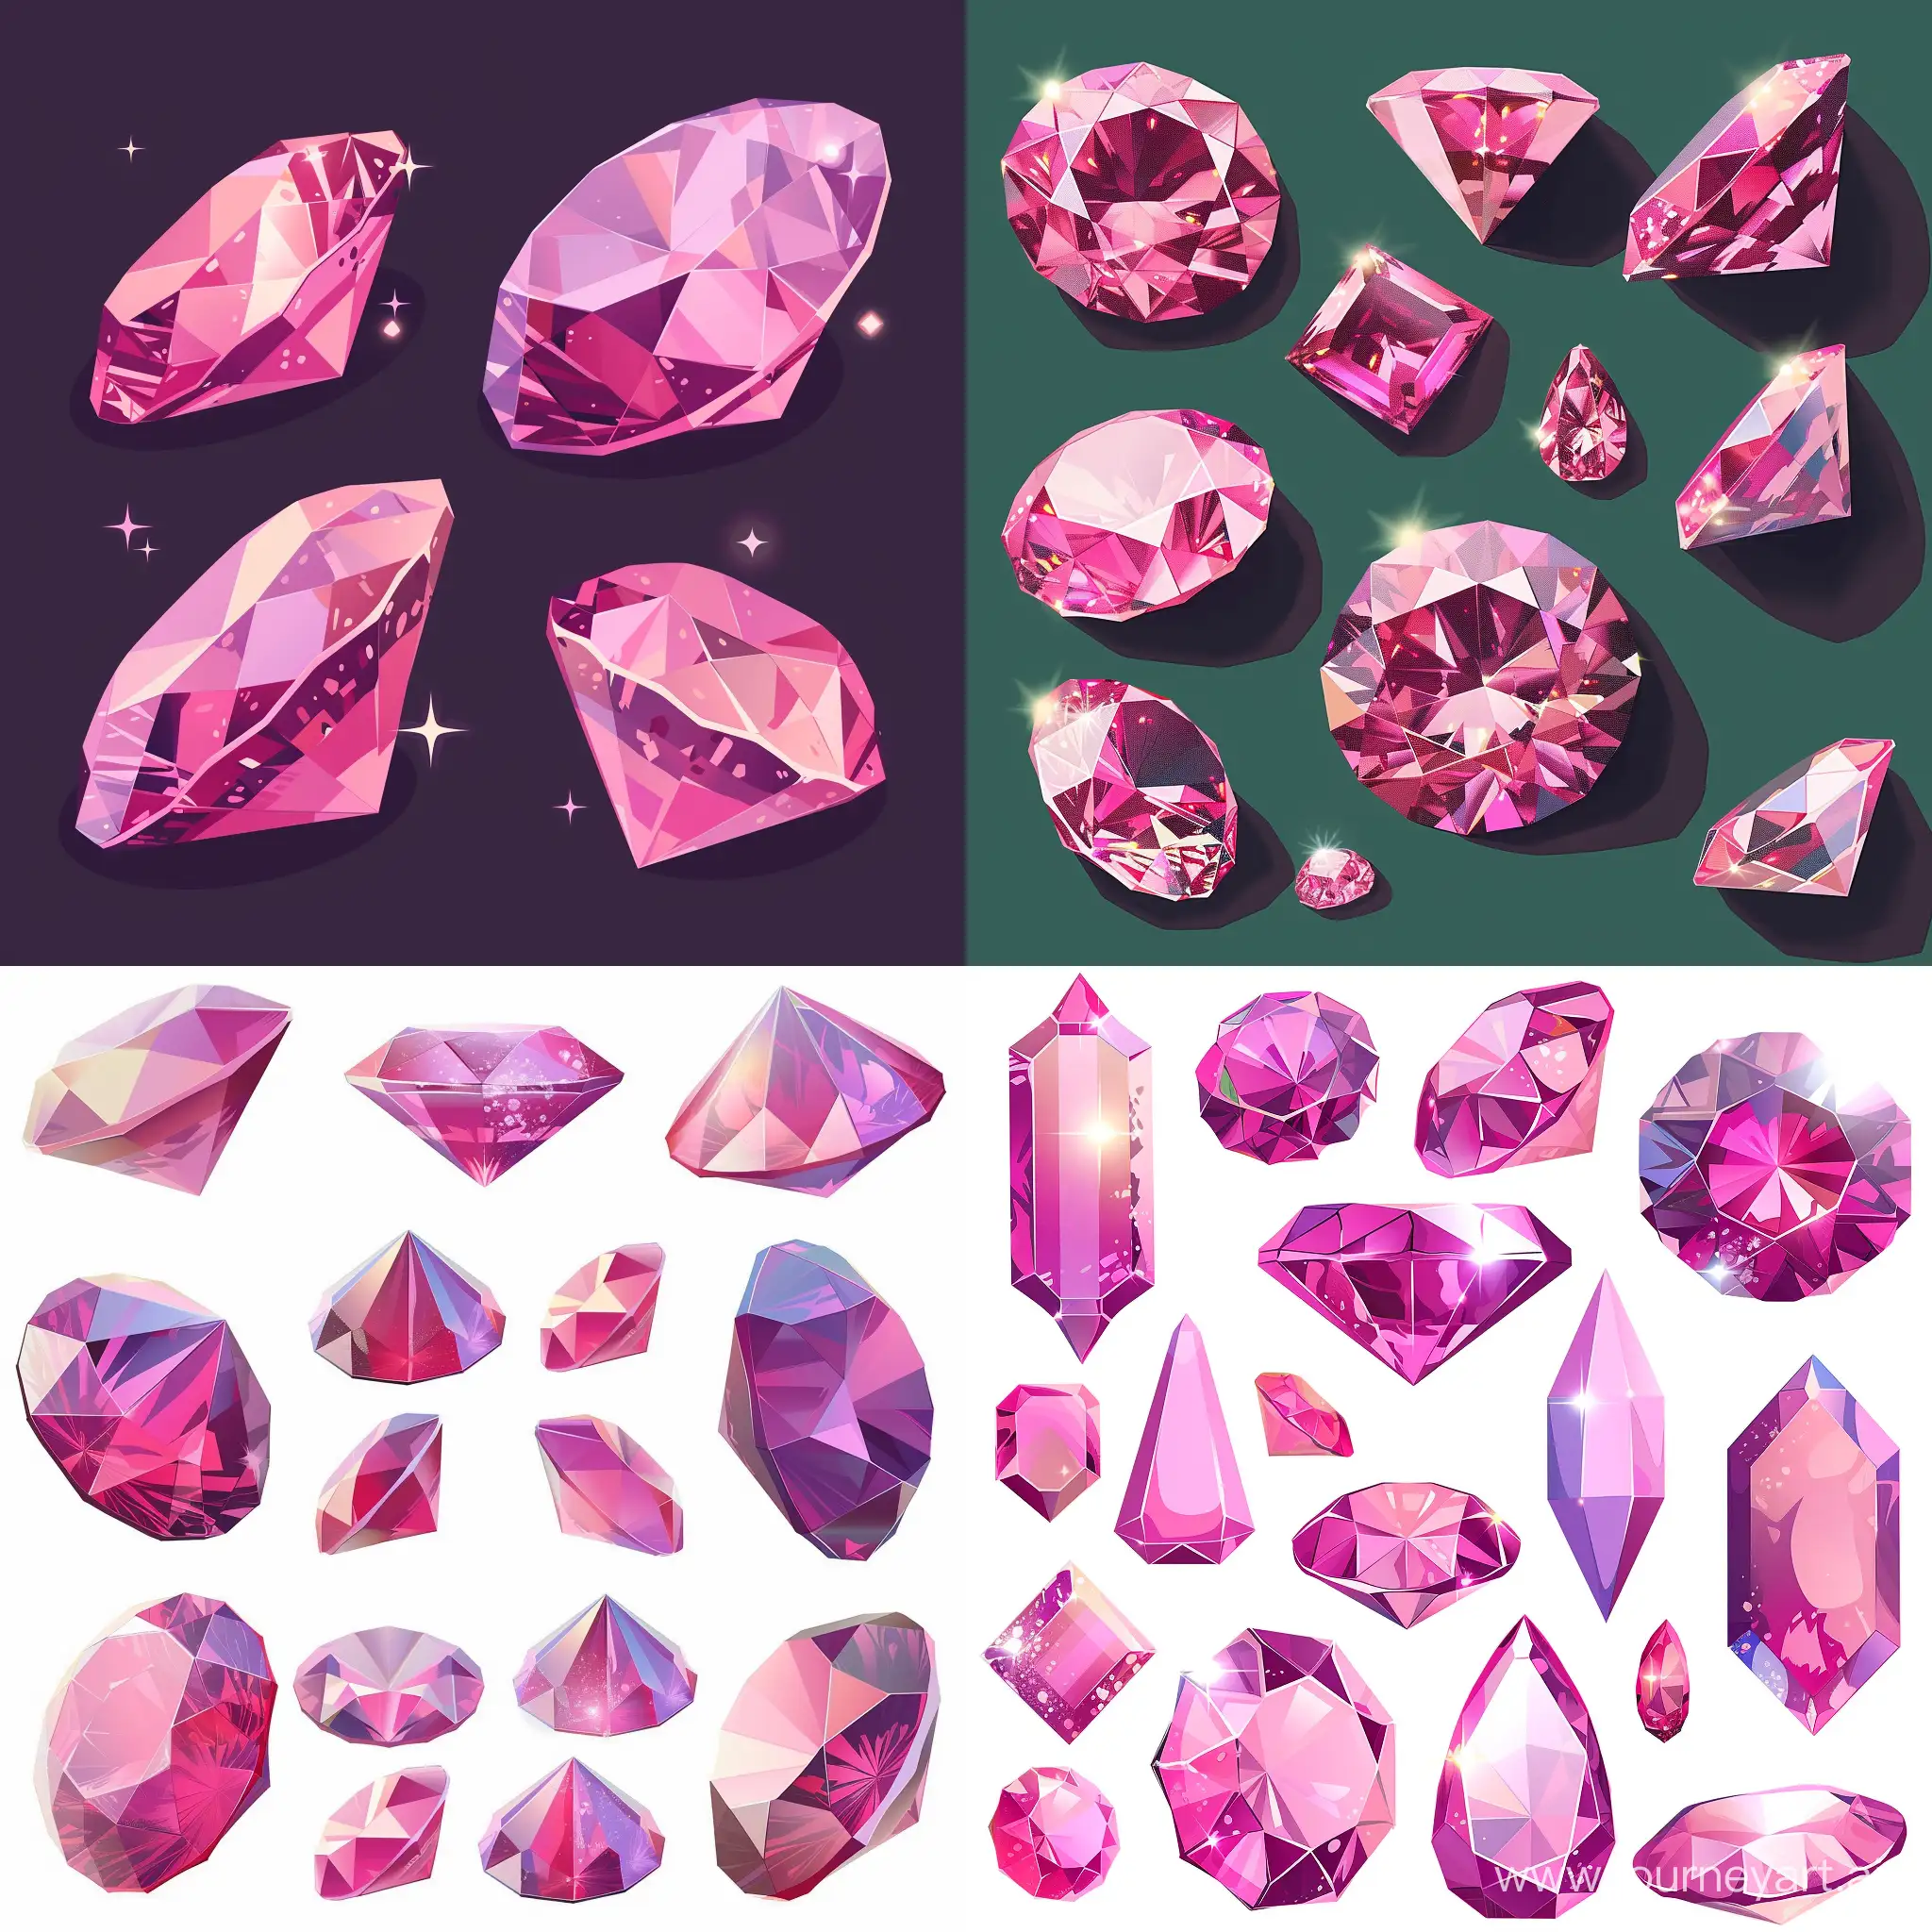 Pink diamonds, translucent, transparent, glittering, sparkling, high quality, in cartoon flat style